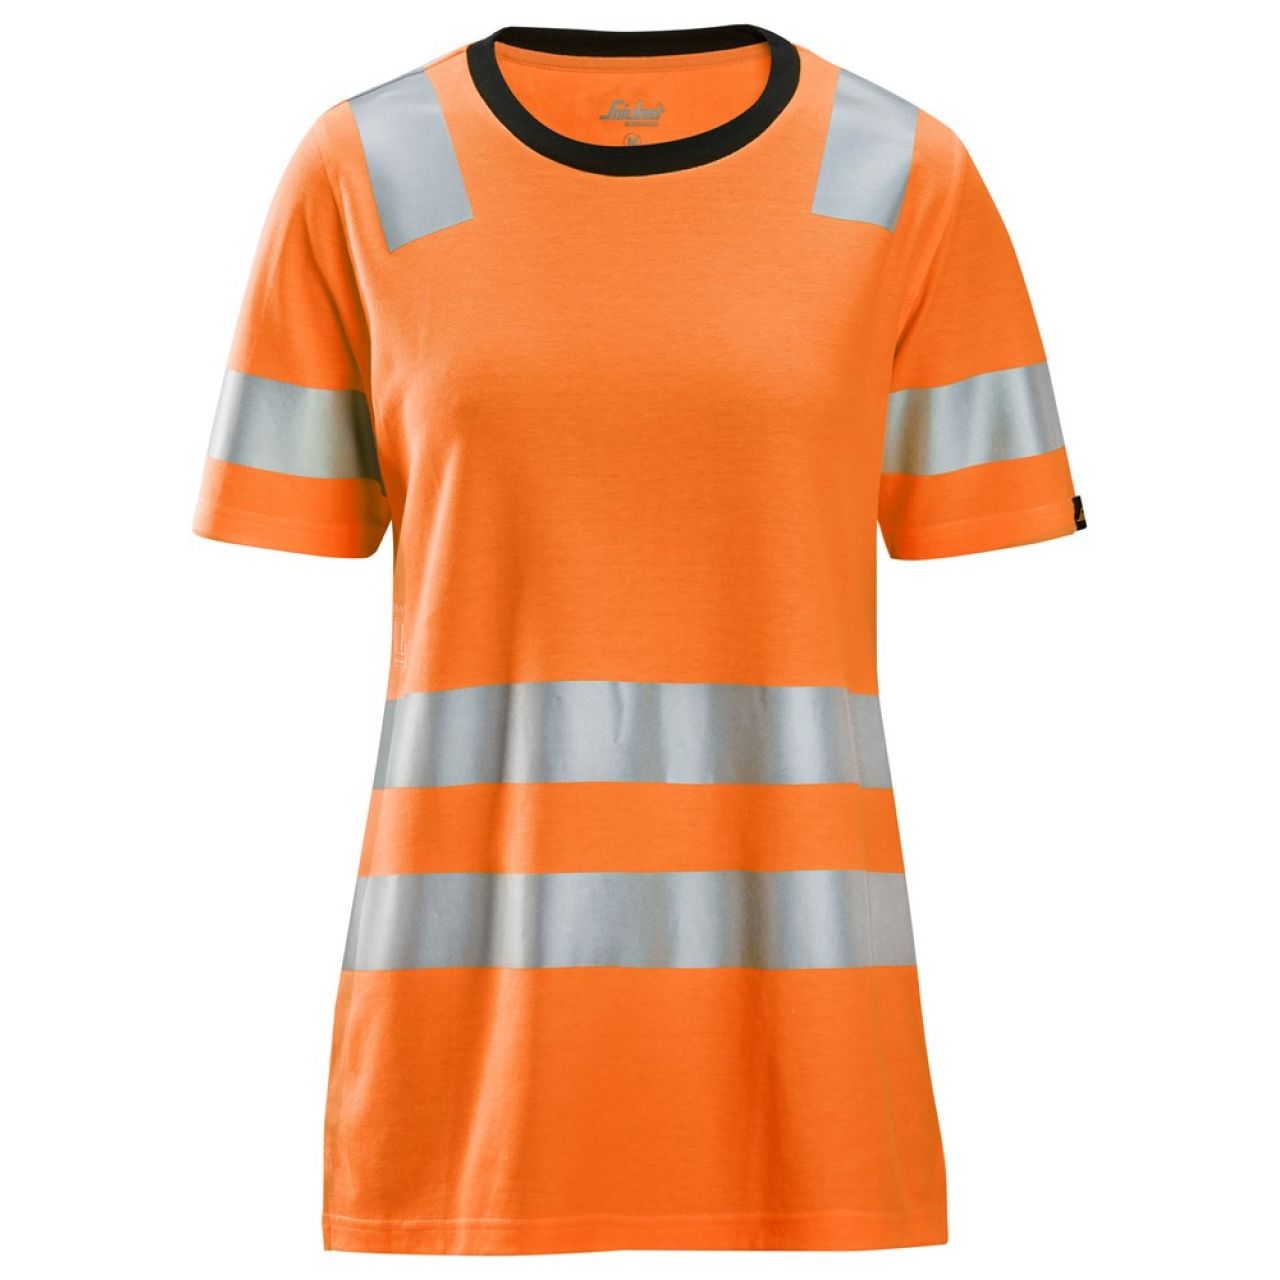 2537 Camiseta de manga corta para mujer de alta visibilidad clase 2 naranja talla XS